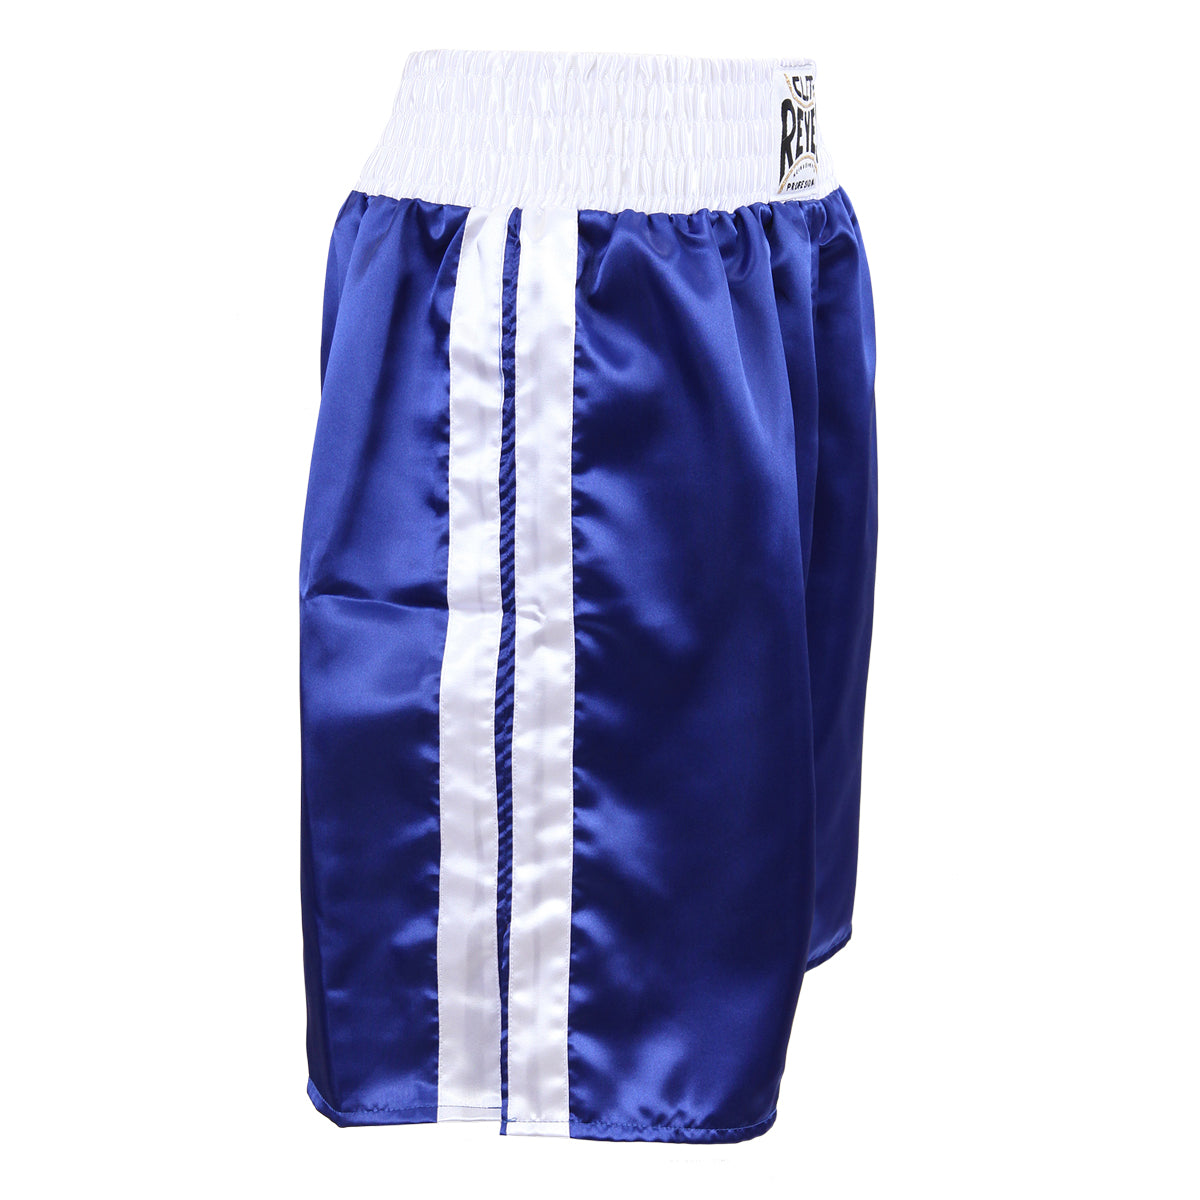 Cleto Reyes Satin Classic Boxing Trunks - Small (32") - Blue/White Cleto Reyes